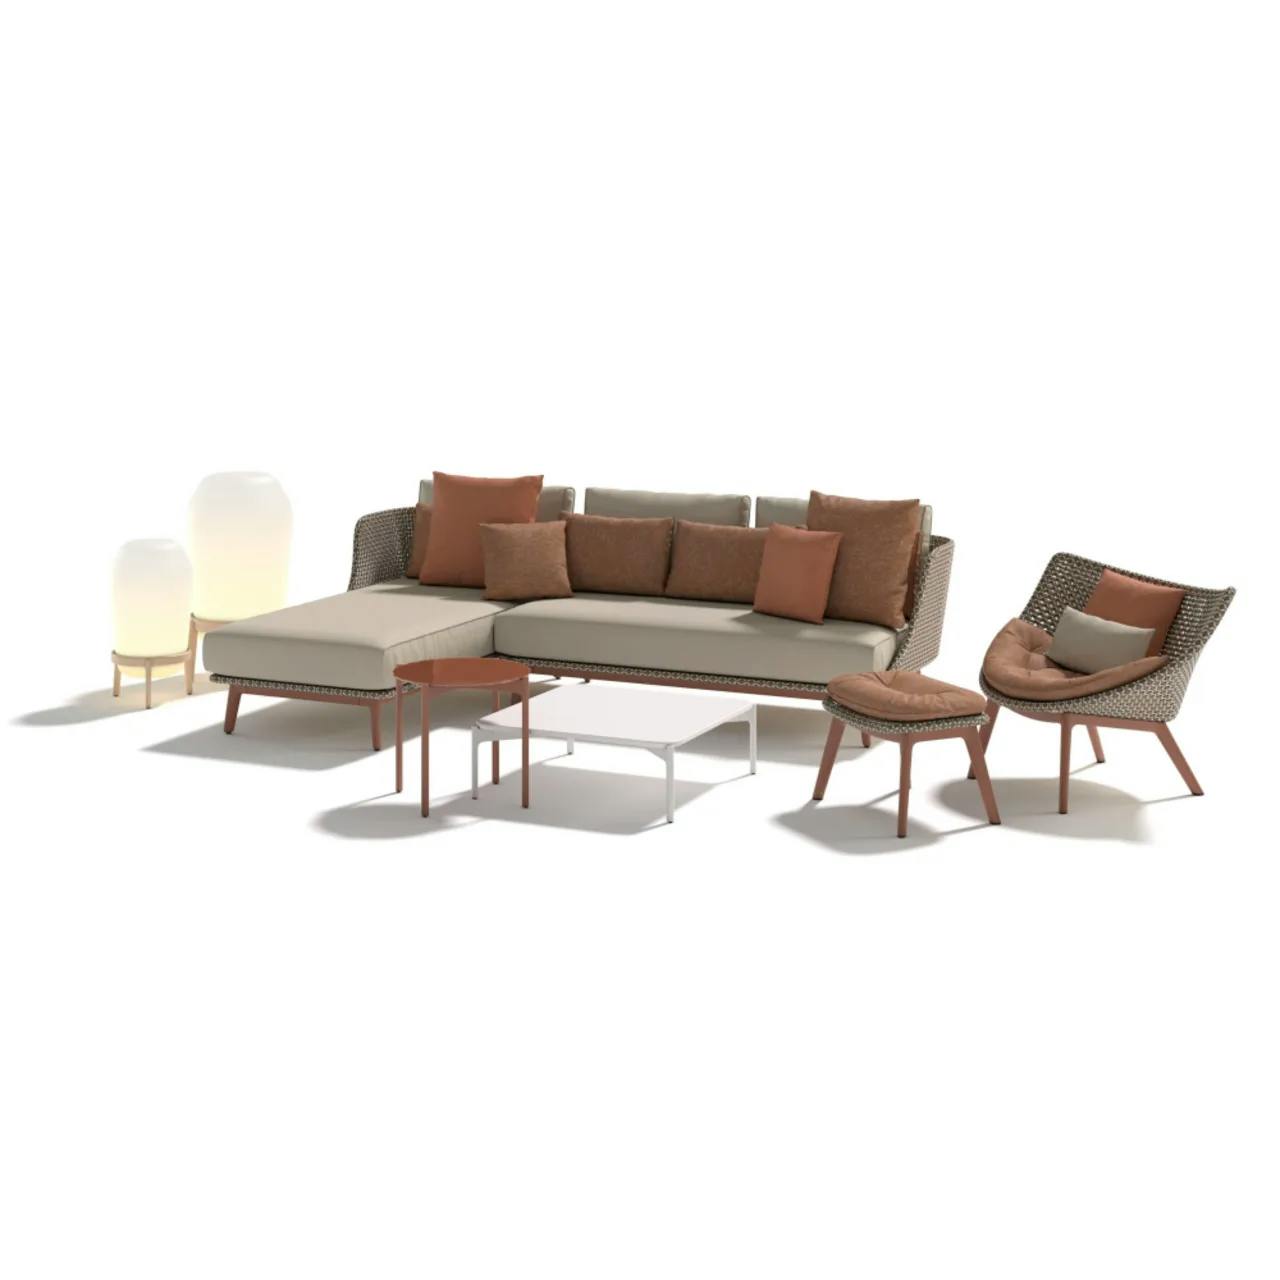 DEDON LOON Floor Lamps | MBARQ Modular Seating | IZON Coffee Tables | MBRACE Club Chair & Footstool